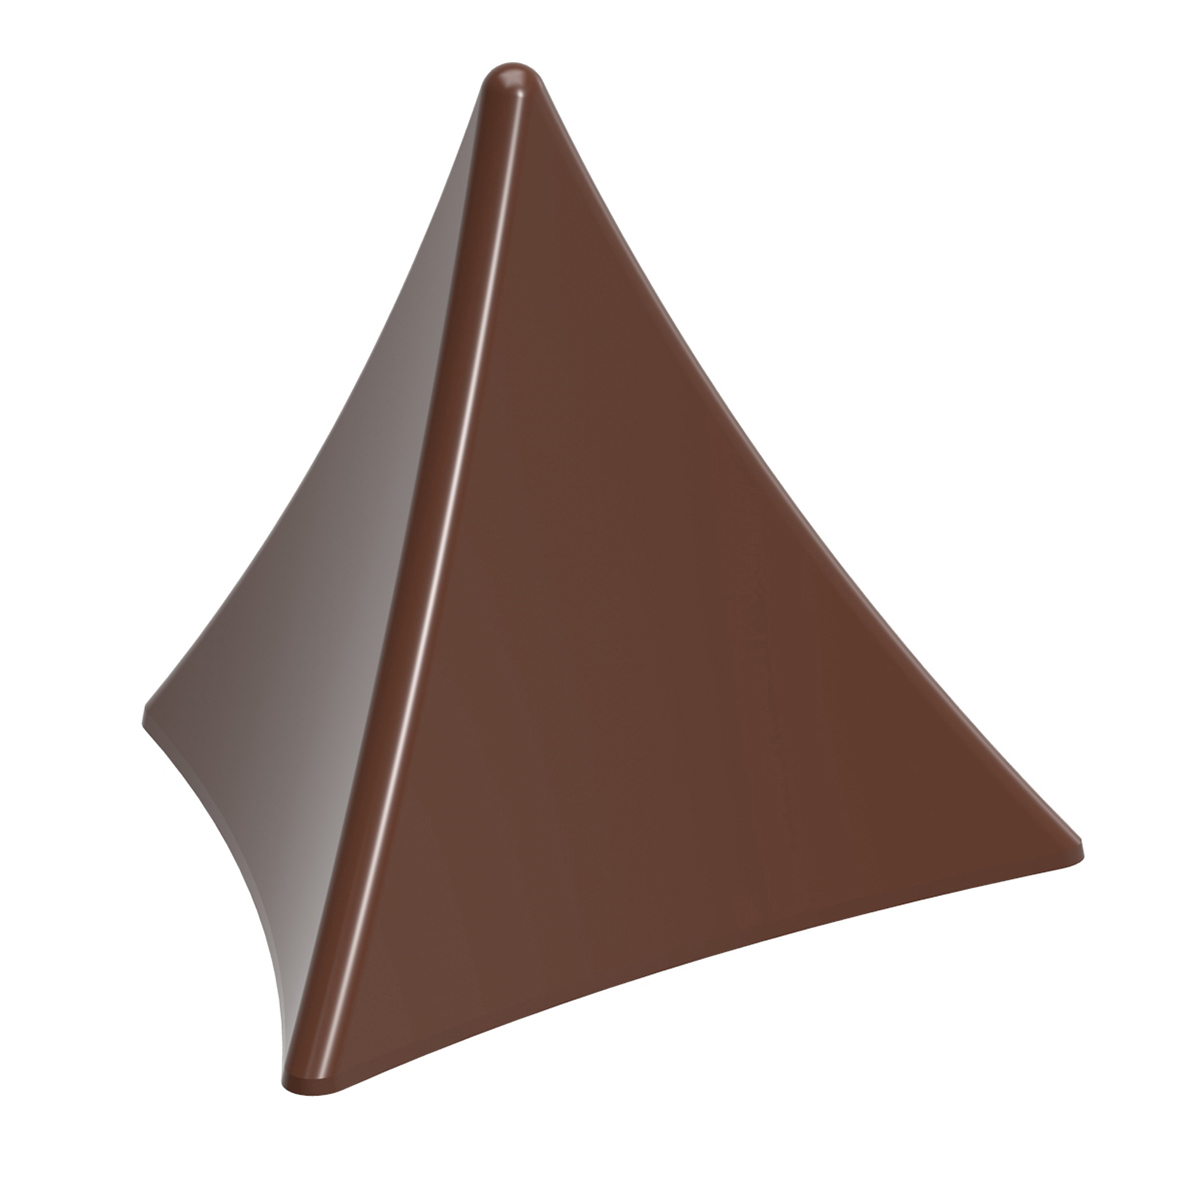 Se Professionel chokoladeform i polycarbonat - Praline Pyramid - Frank Haasnoot CW1951 hos BageTid.dk